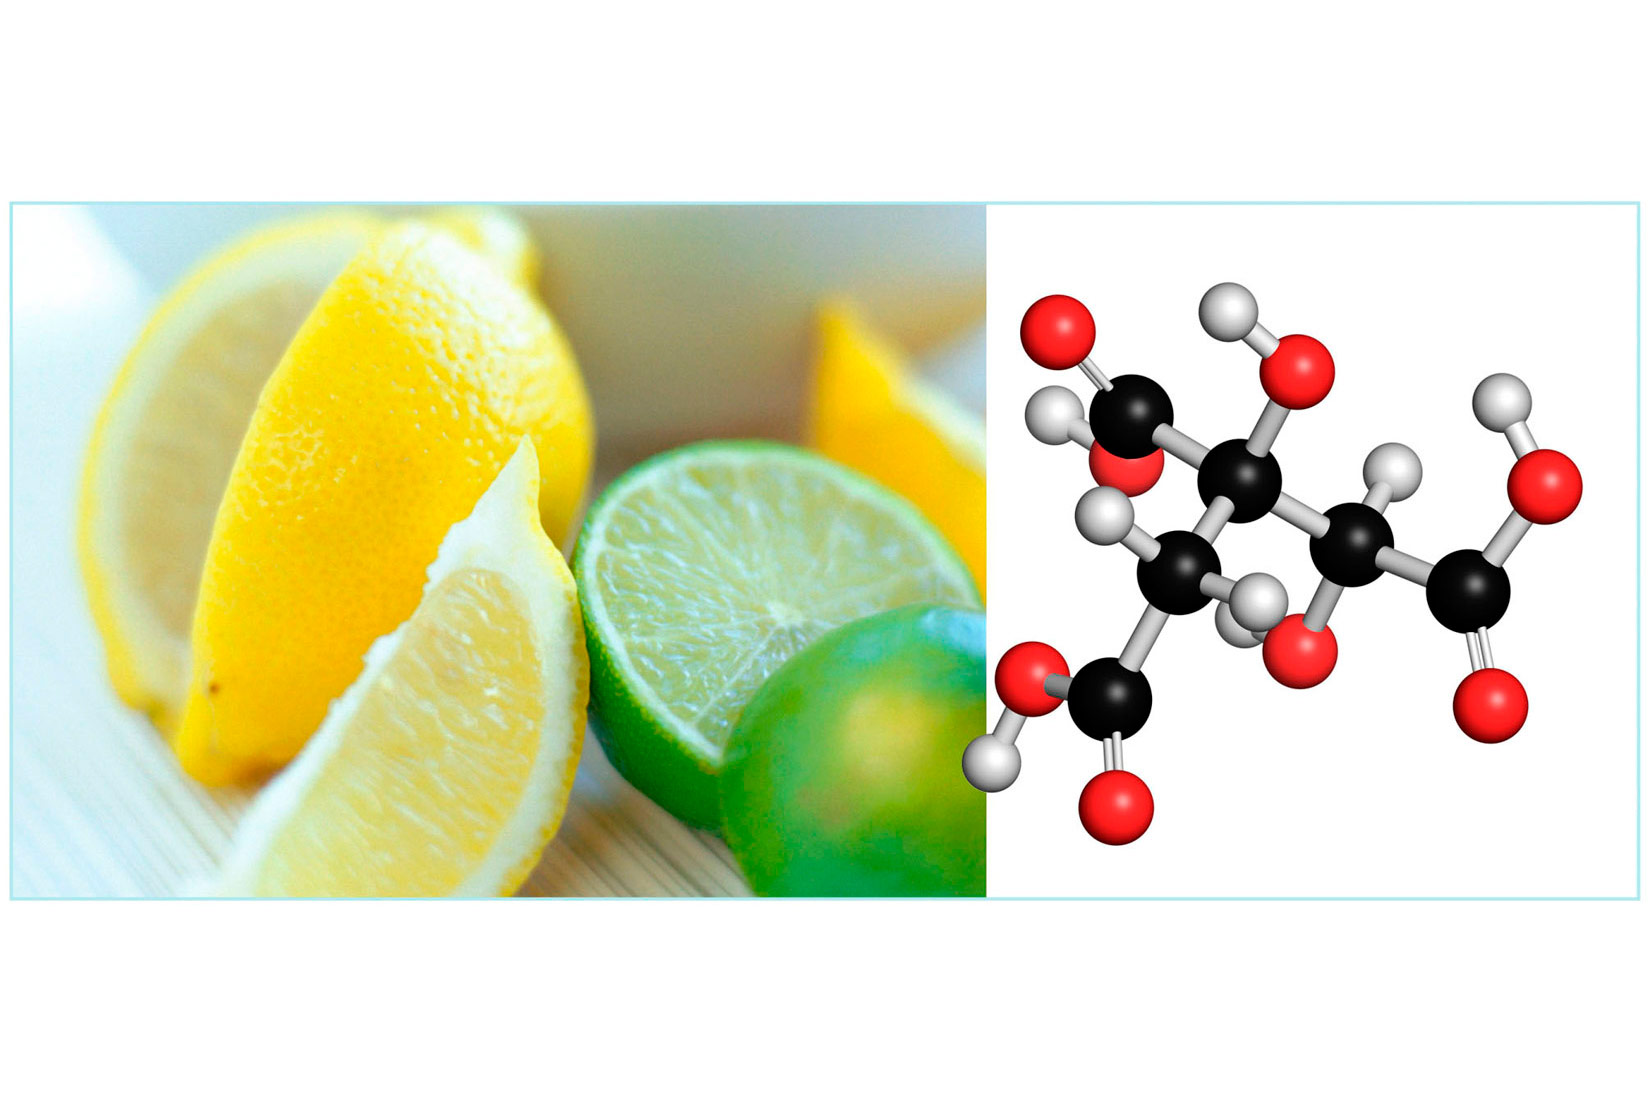 Fotografija prikazuje žuti limun i zelenu limentu prerezane na četvrtine. S desne strane je prikazana strukturna formula limunske kiseline.